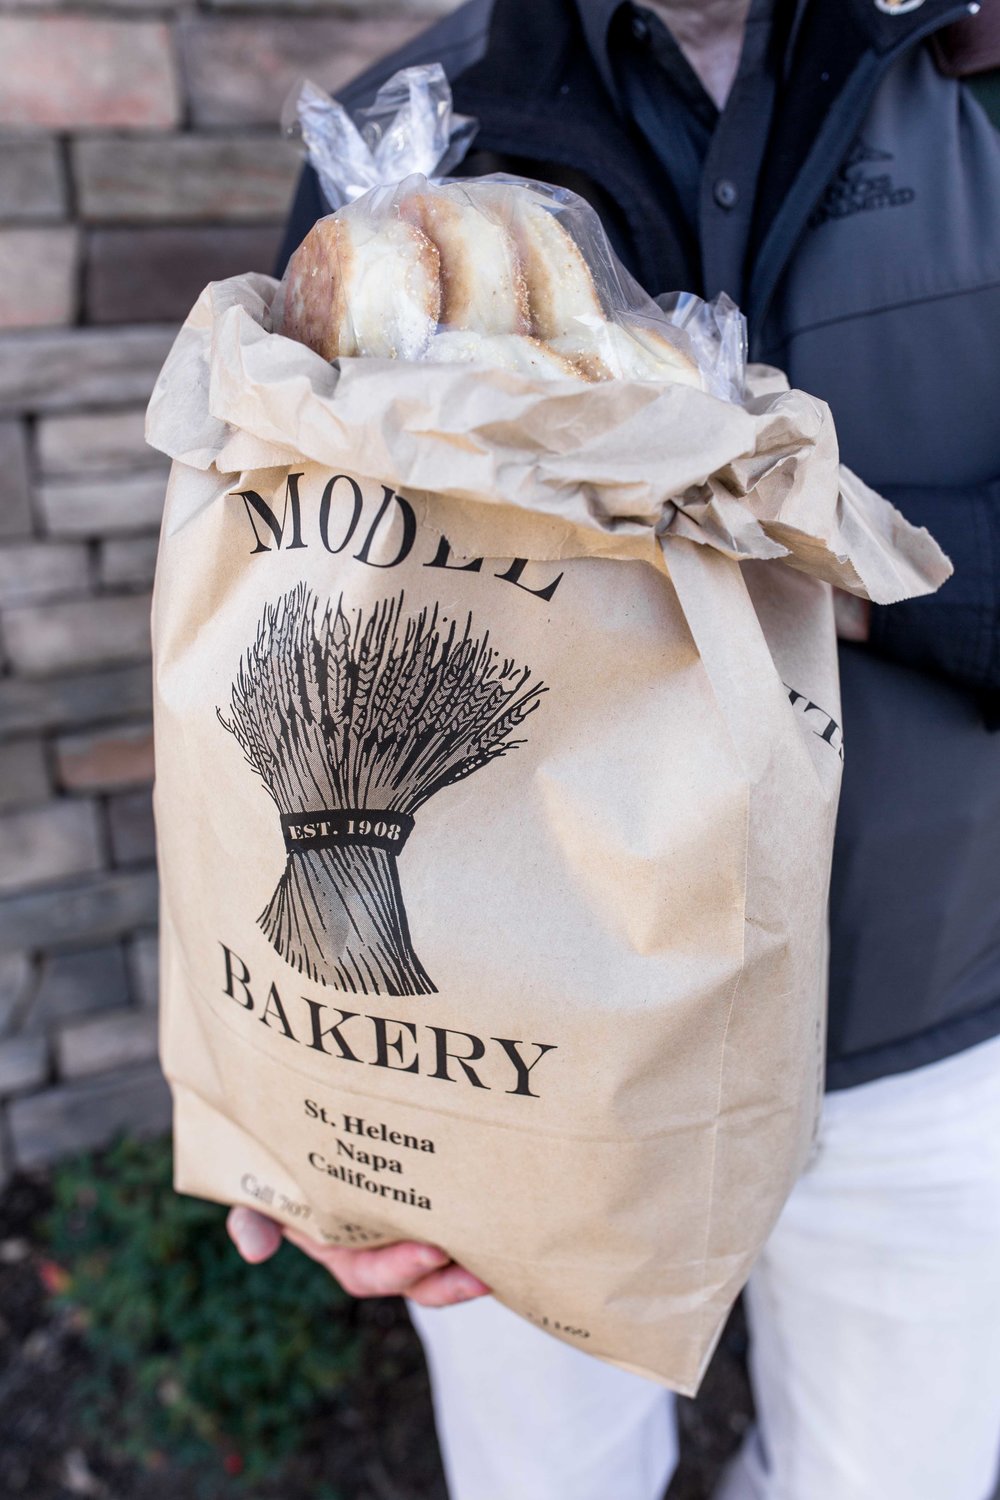 bag of english muffins model bakery napa california 